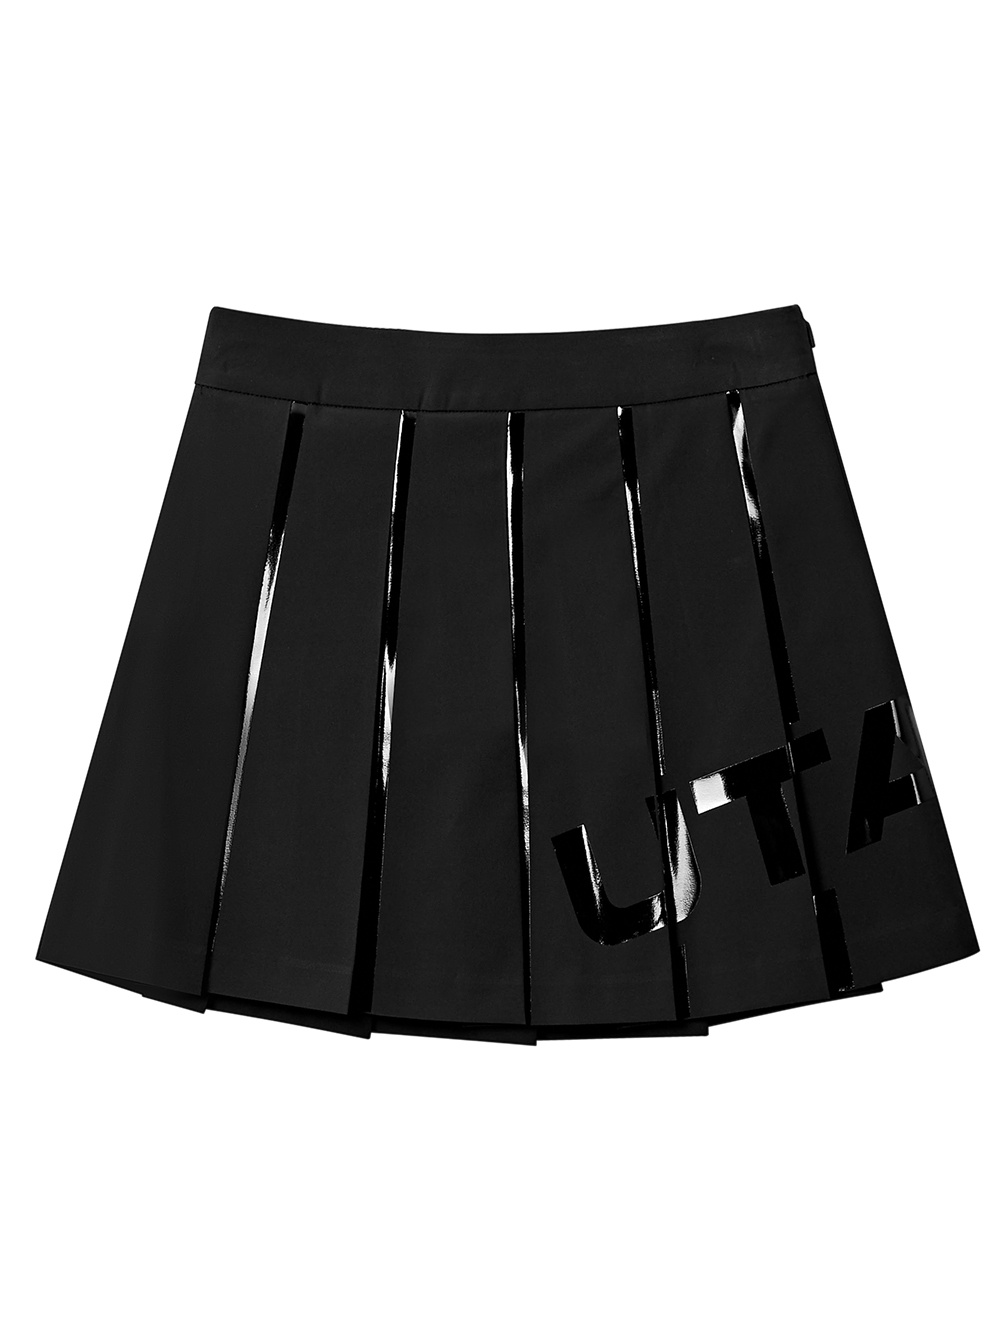 UTAA Welding Bounce Logo Flare Fan Skirt : Black – UTAA GOLF USA – Welcome